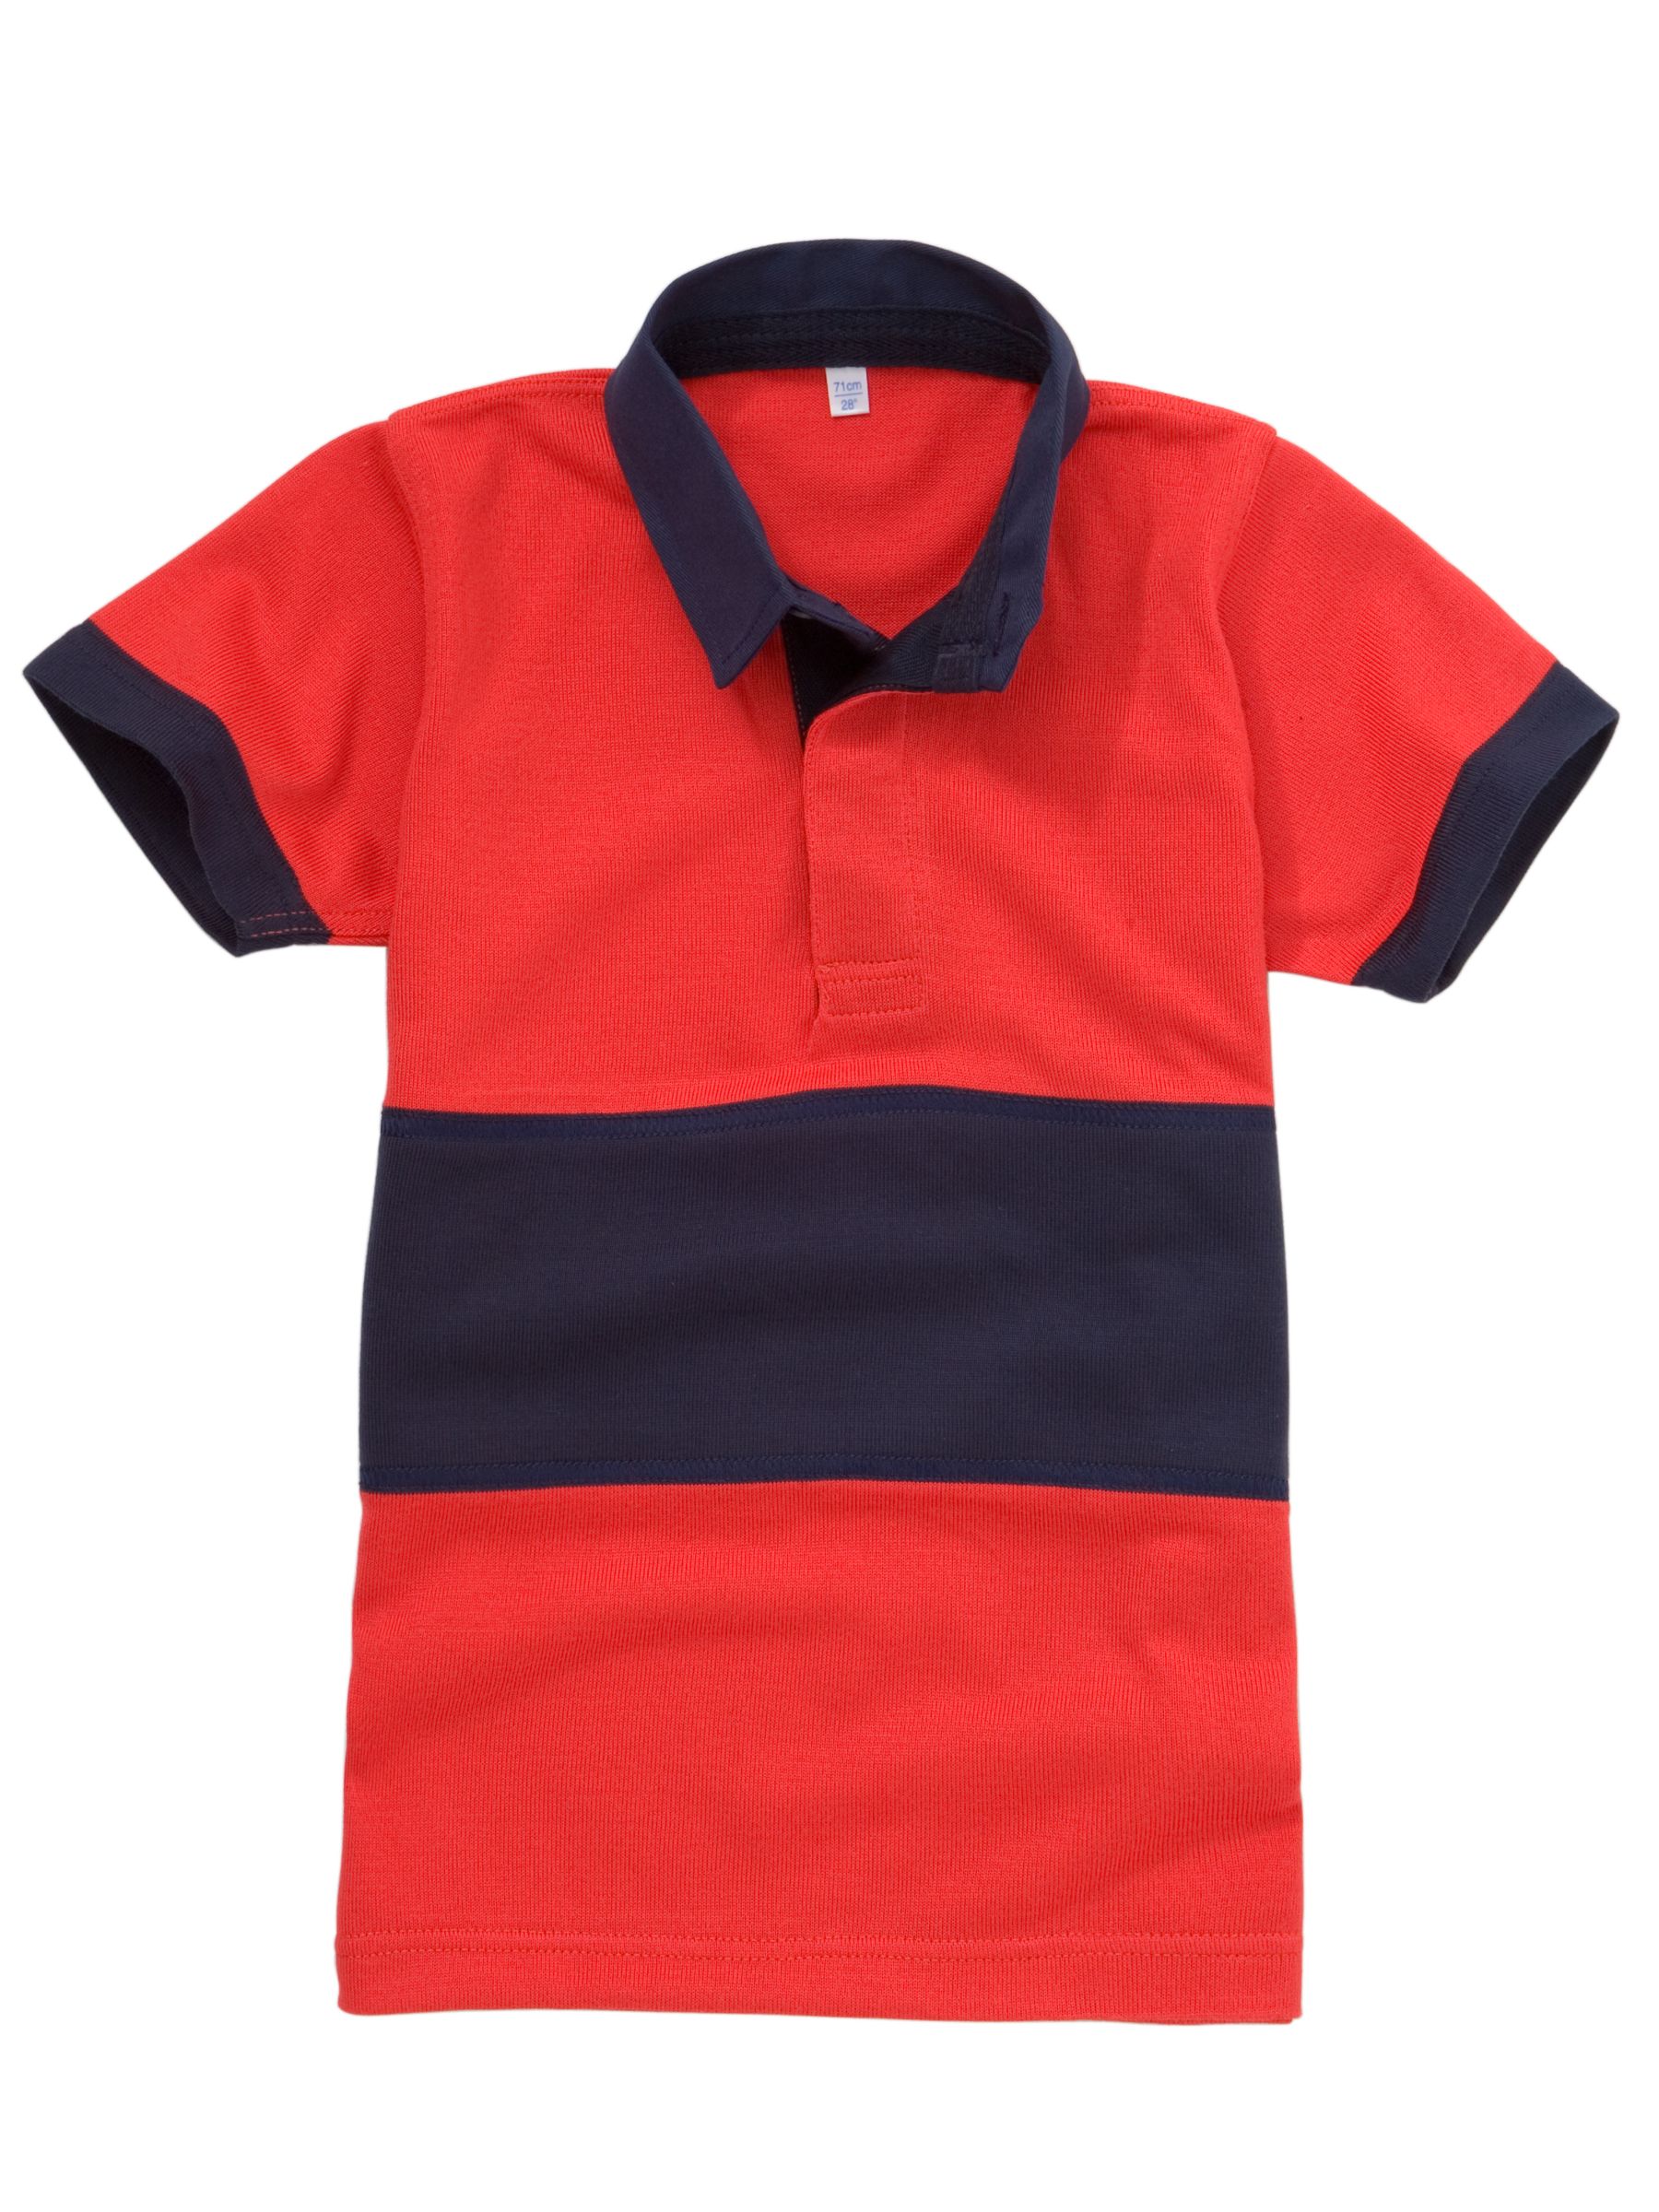 School Boys Rugby Shirt, Red/navy